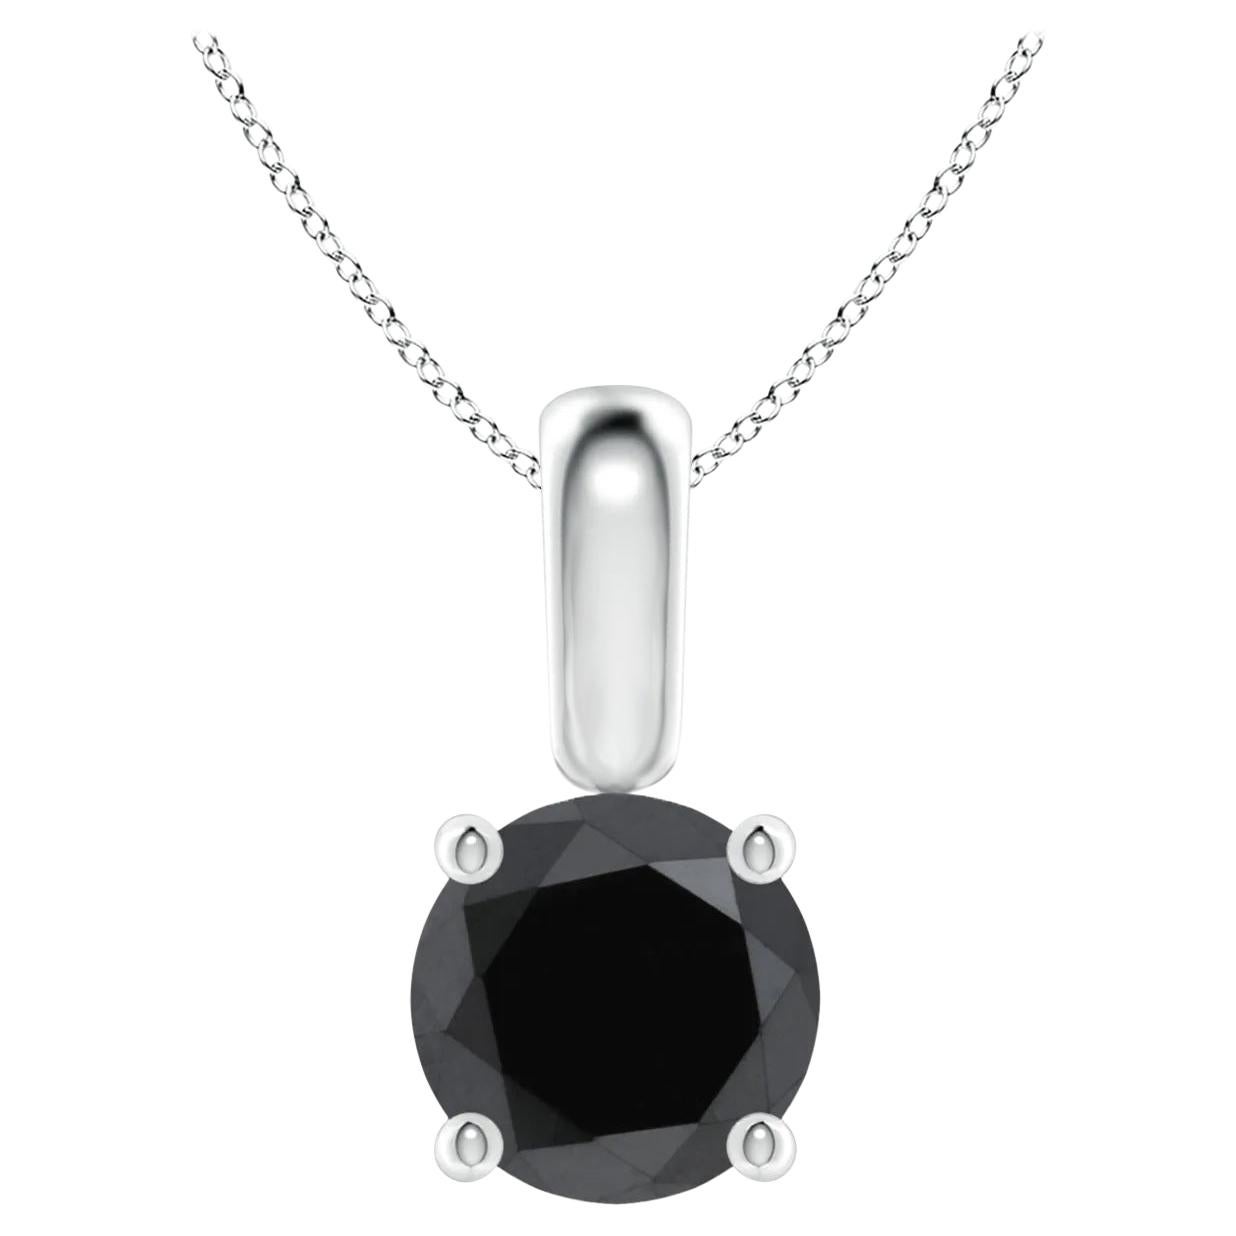 1.76 Carat Round Black Diamond Solitaire Pendant Necklace in 14K White Gold